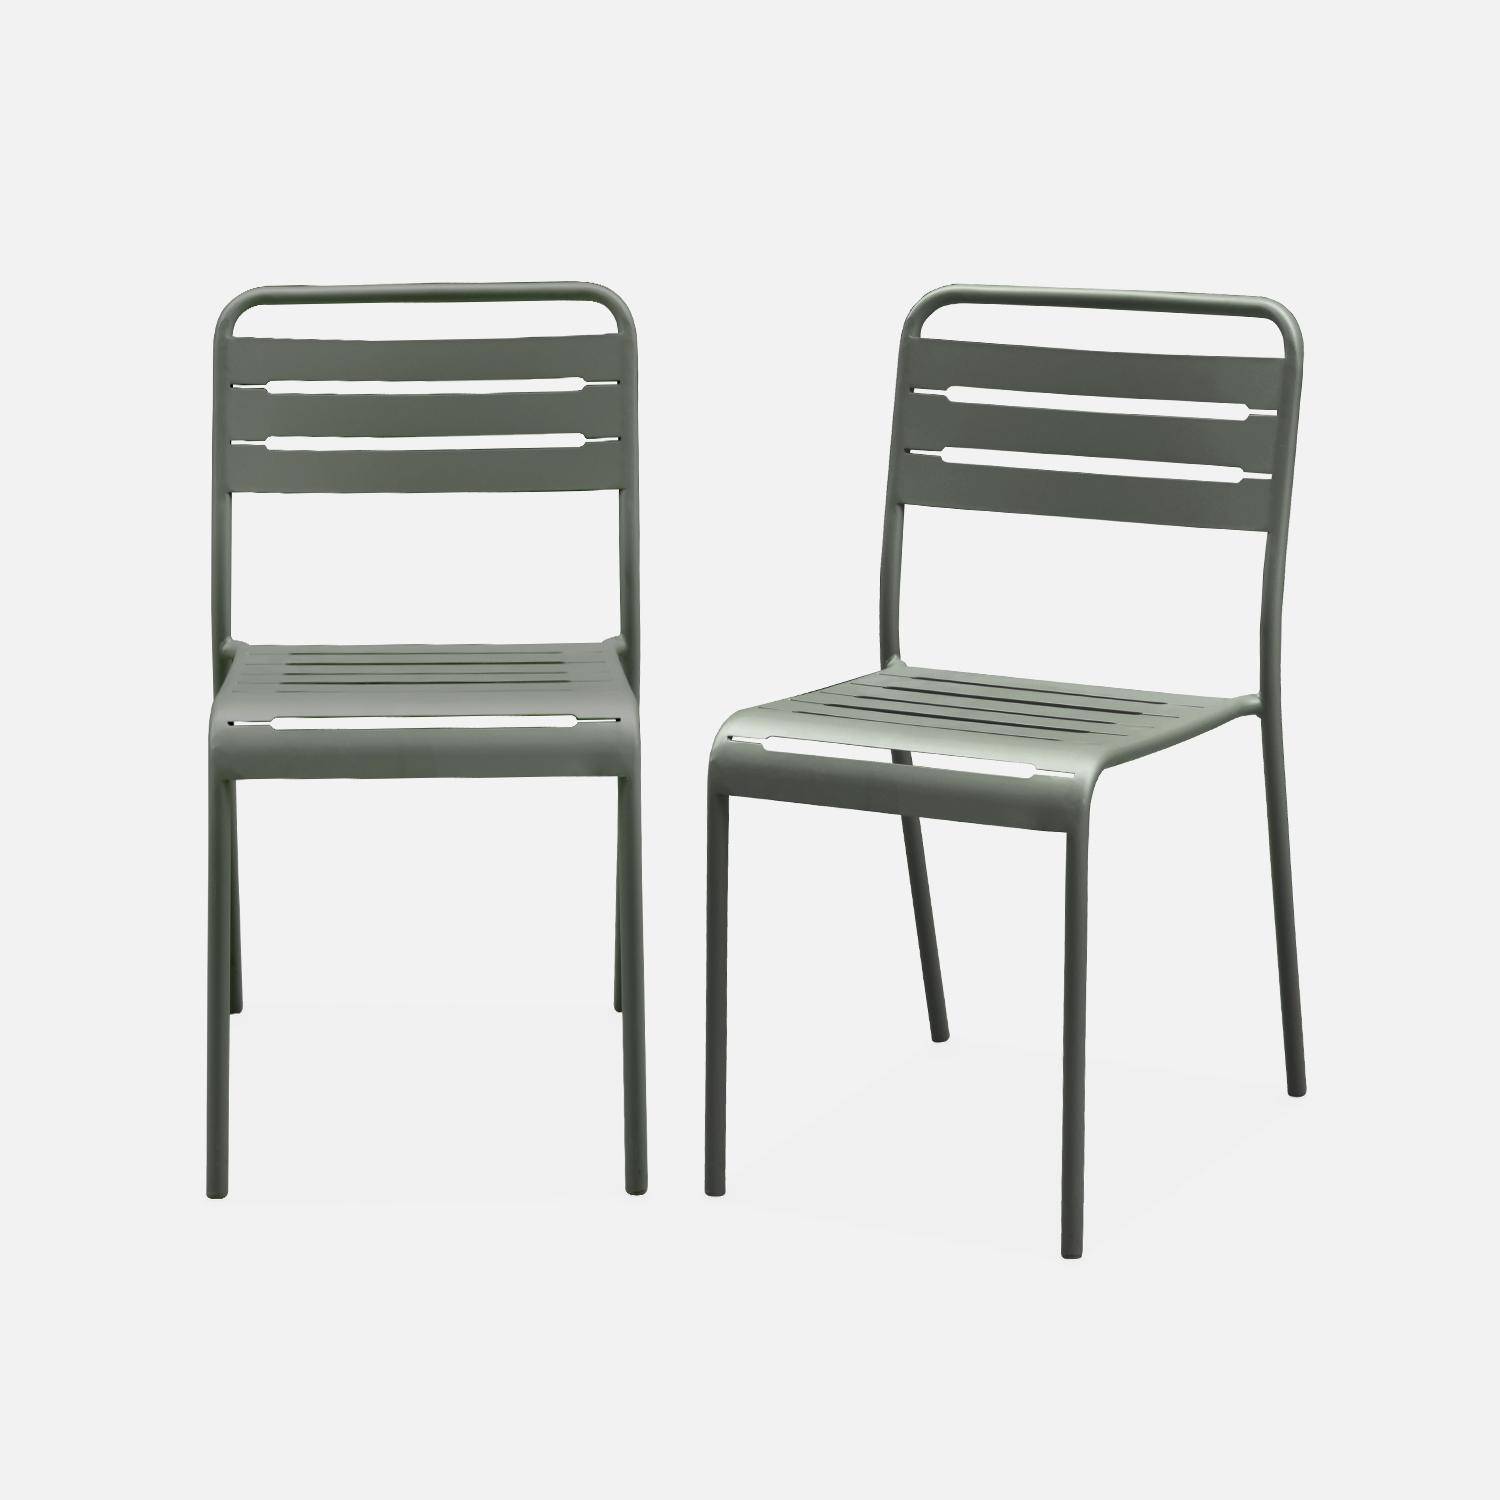 Lote de 2 sillas de jardín de acero, 2 asientos, sabana, Amelia, A44 x P52 x Alt79cm Photo4